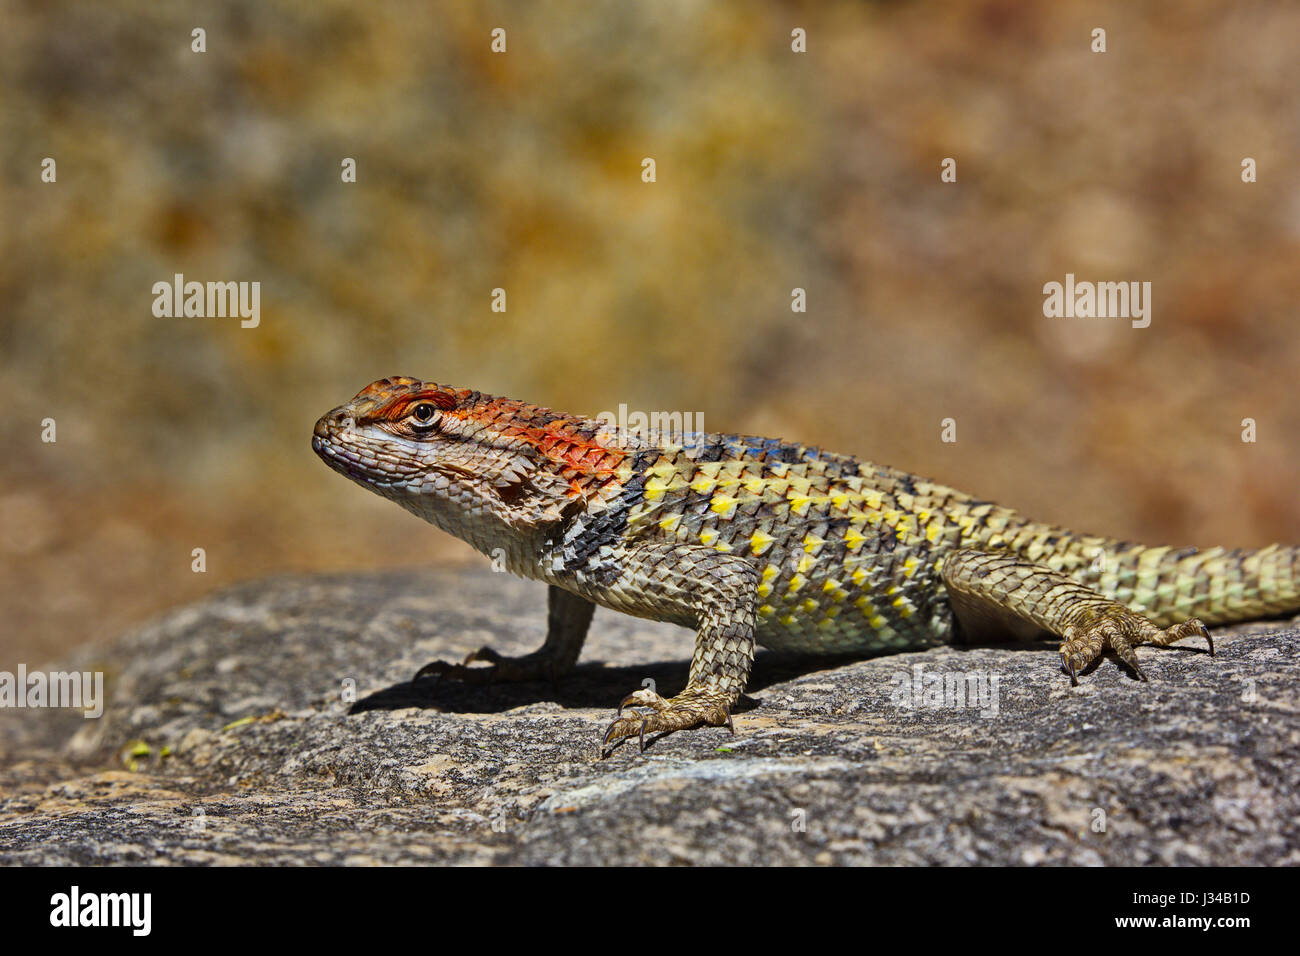 Spiny Lizard, genus Sceloporus, alertly stands on rock in Tohono Chul Park, Tucson, Arizona in America's Southwest. Stock Photo